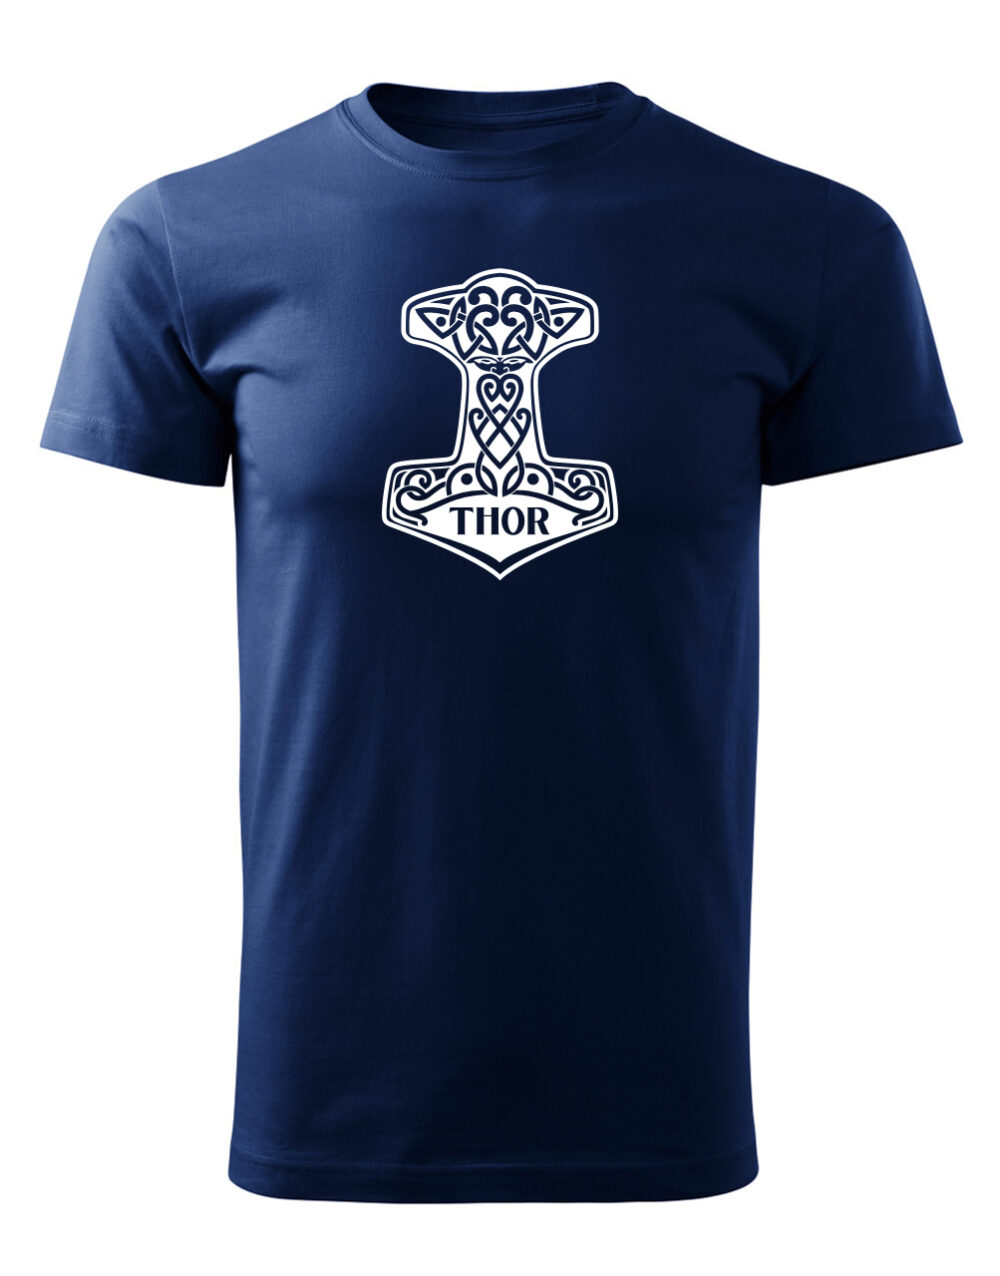 Pánské tričko s potiskem Thorovo kladivo námořnická modrá